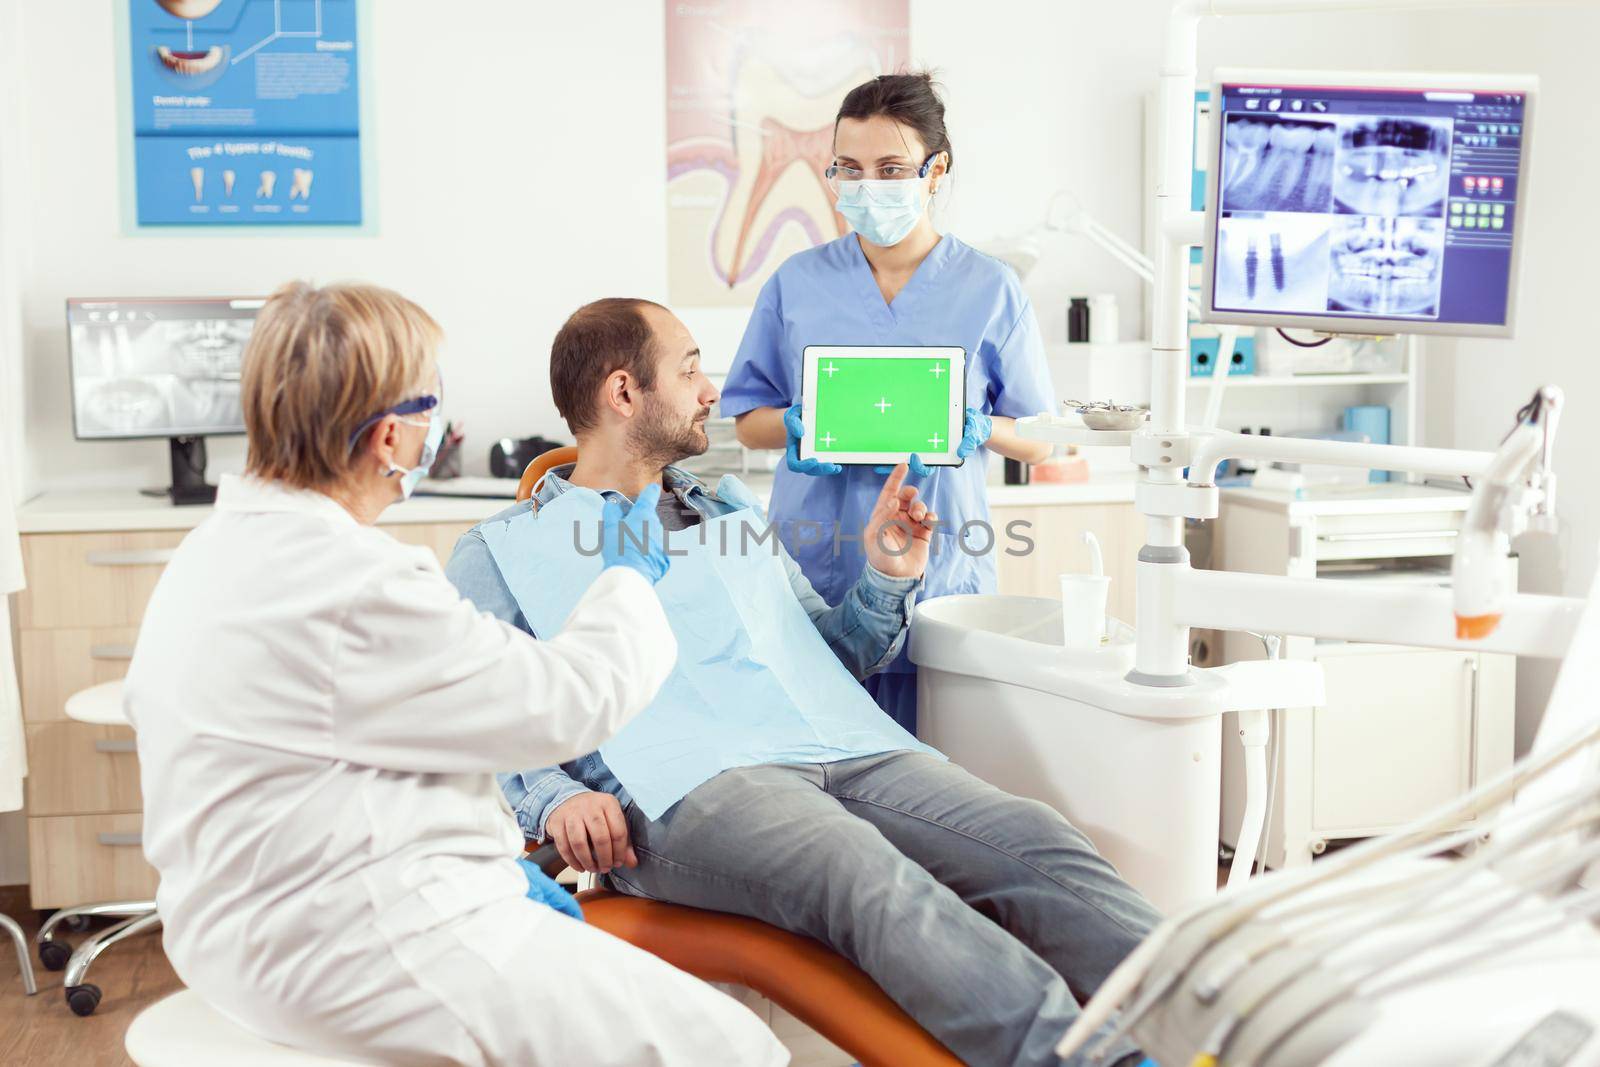 Medical nurse holding mock up green screen chroma key tablet by DCStudio